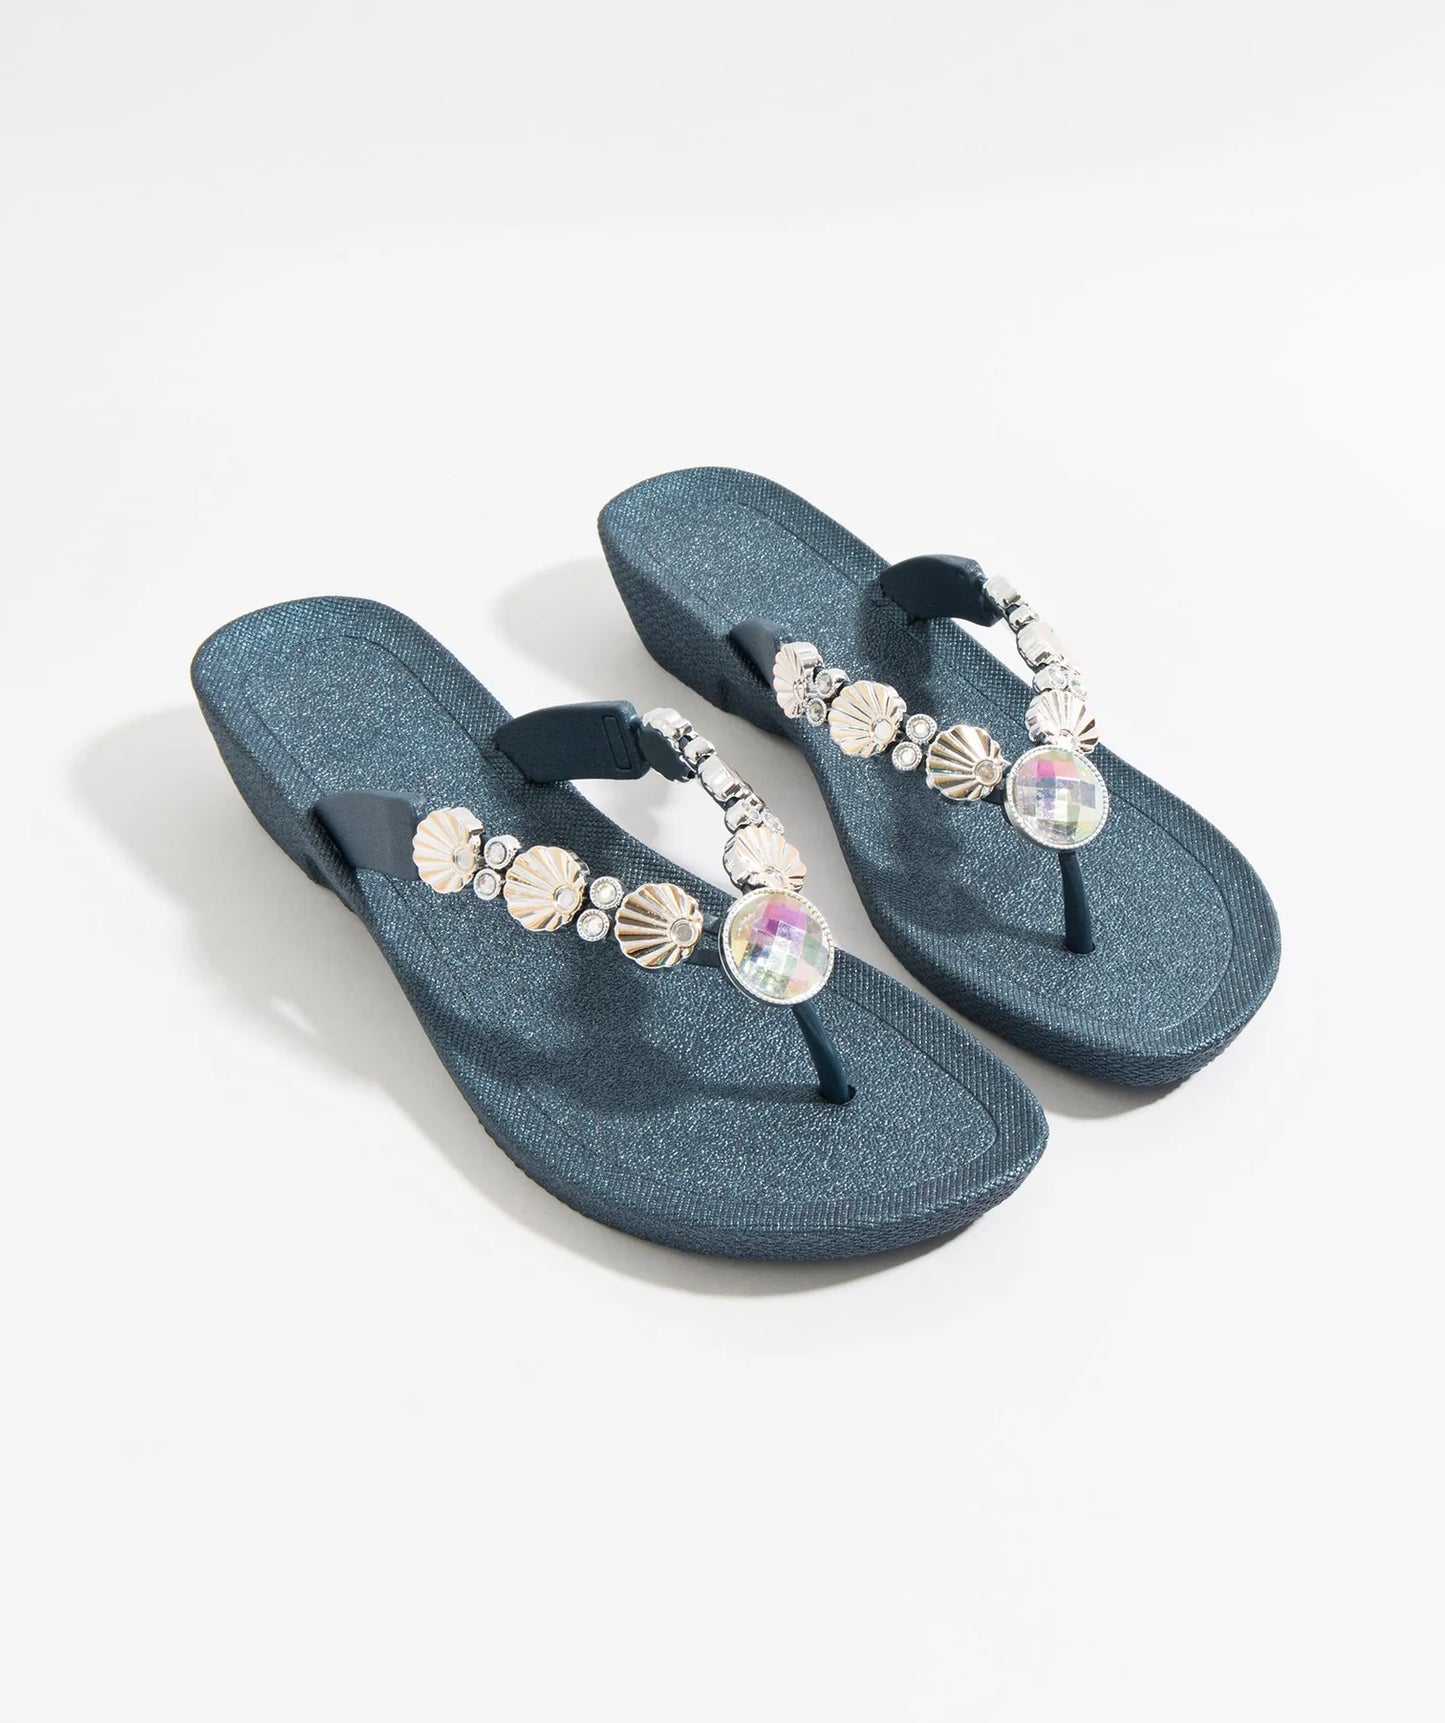 Pia Rossin Seychelles sandals 2 colours